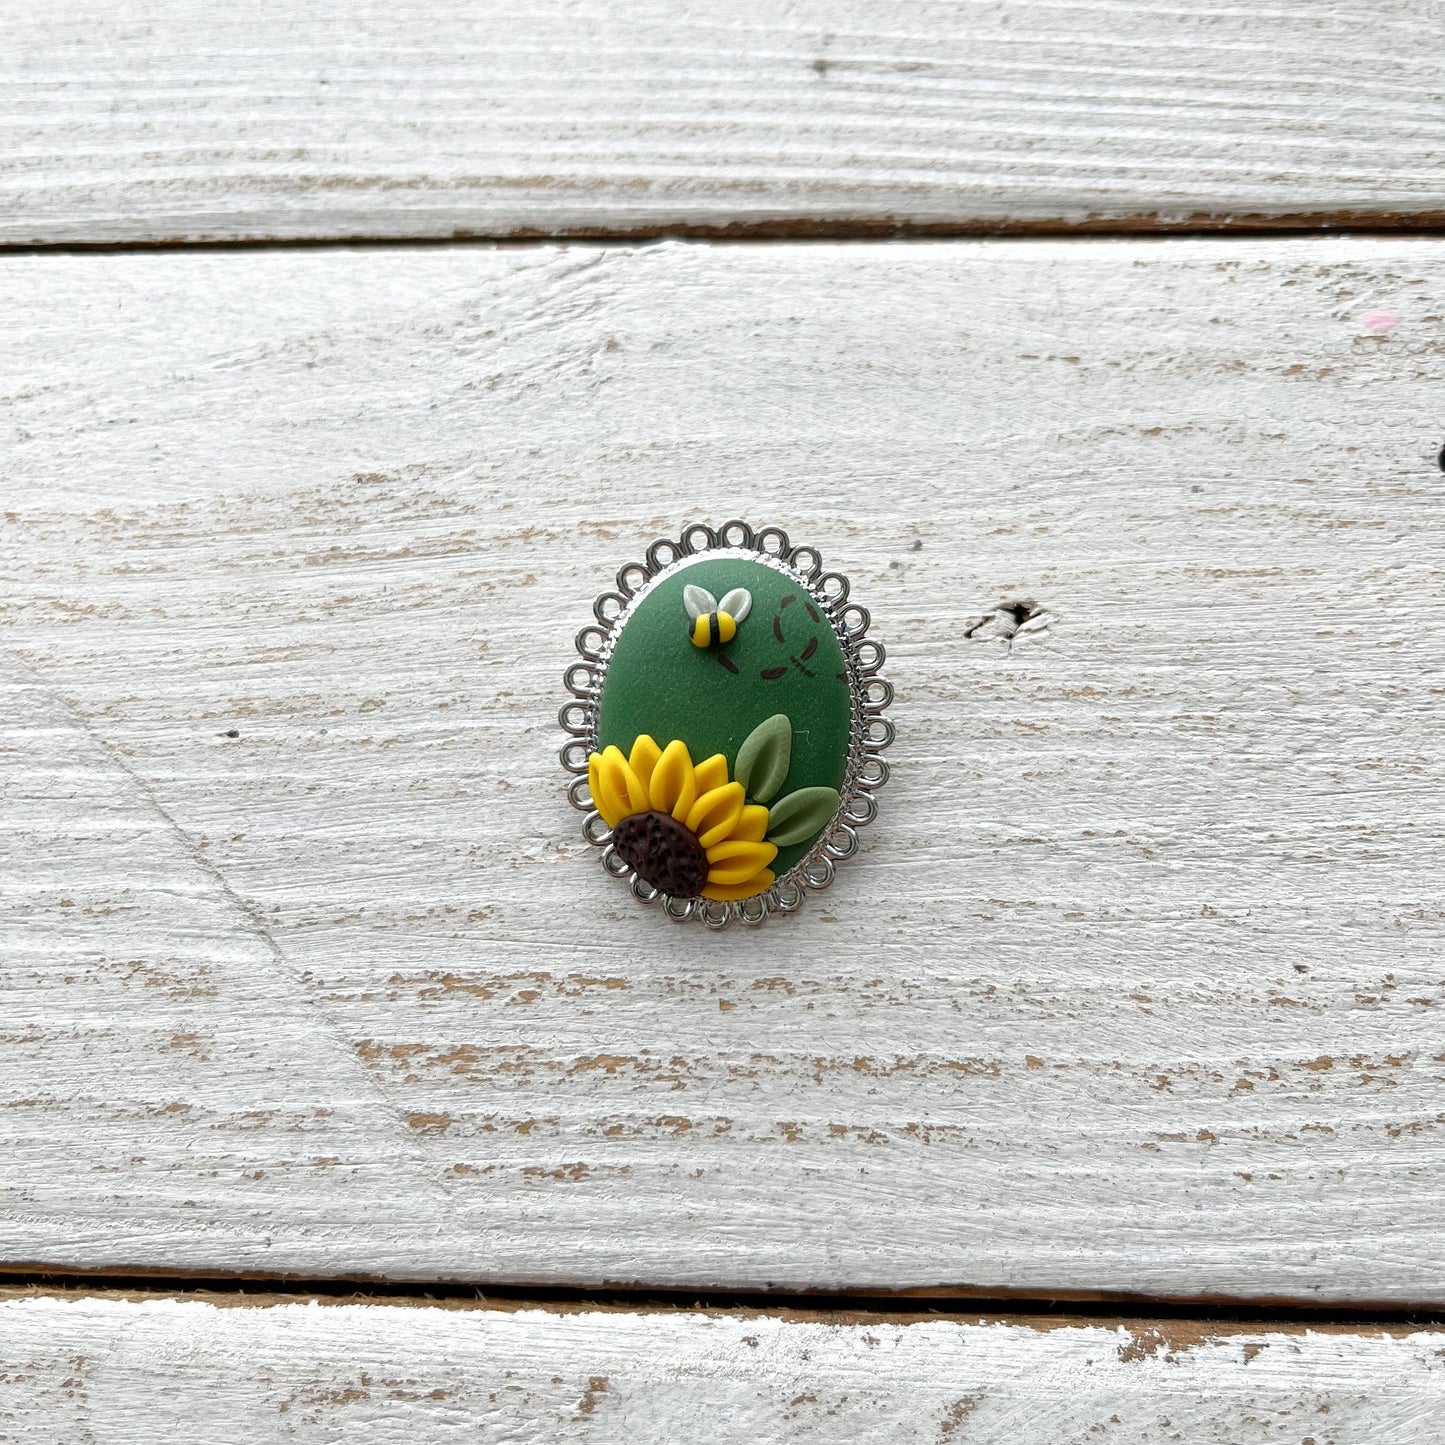 Sunflower brooch, polymer clay appliqué pin brooch